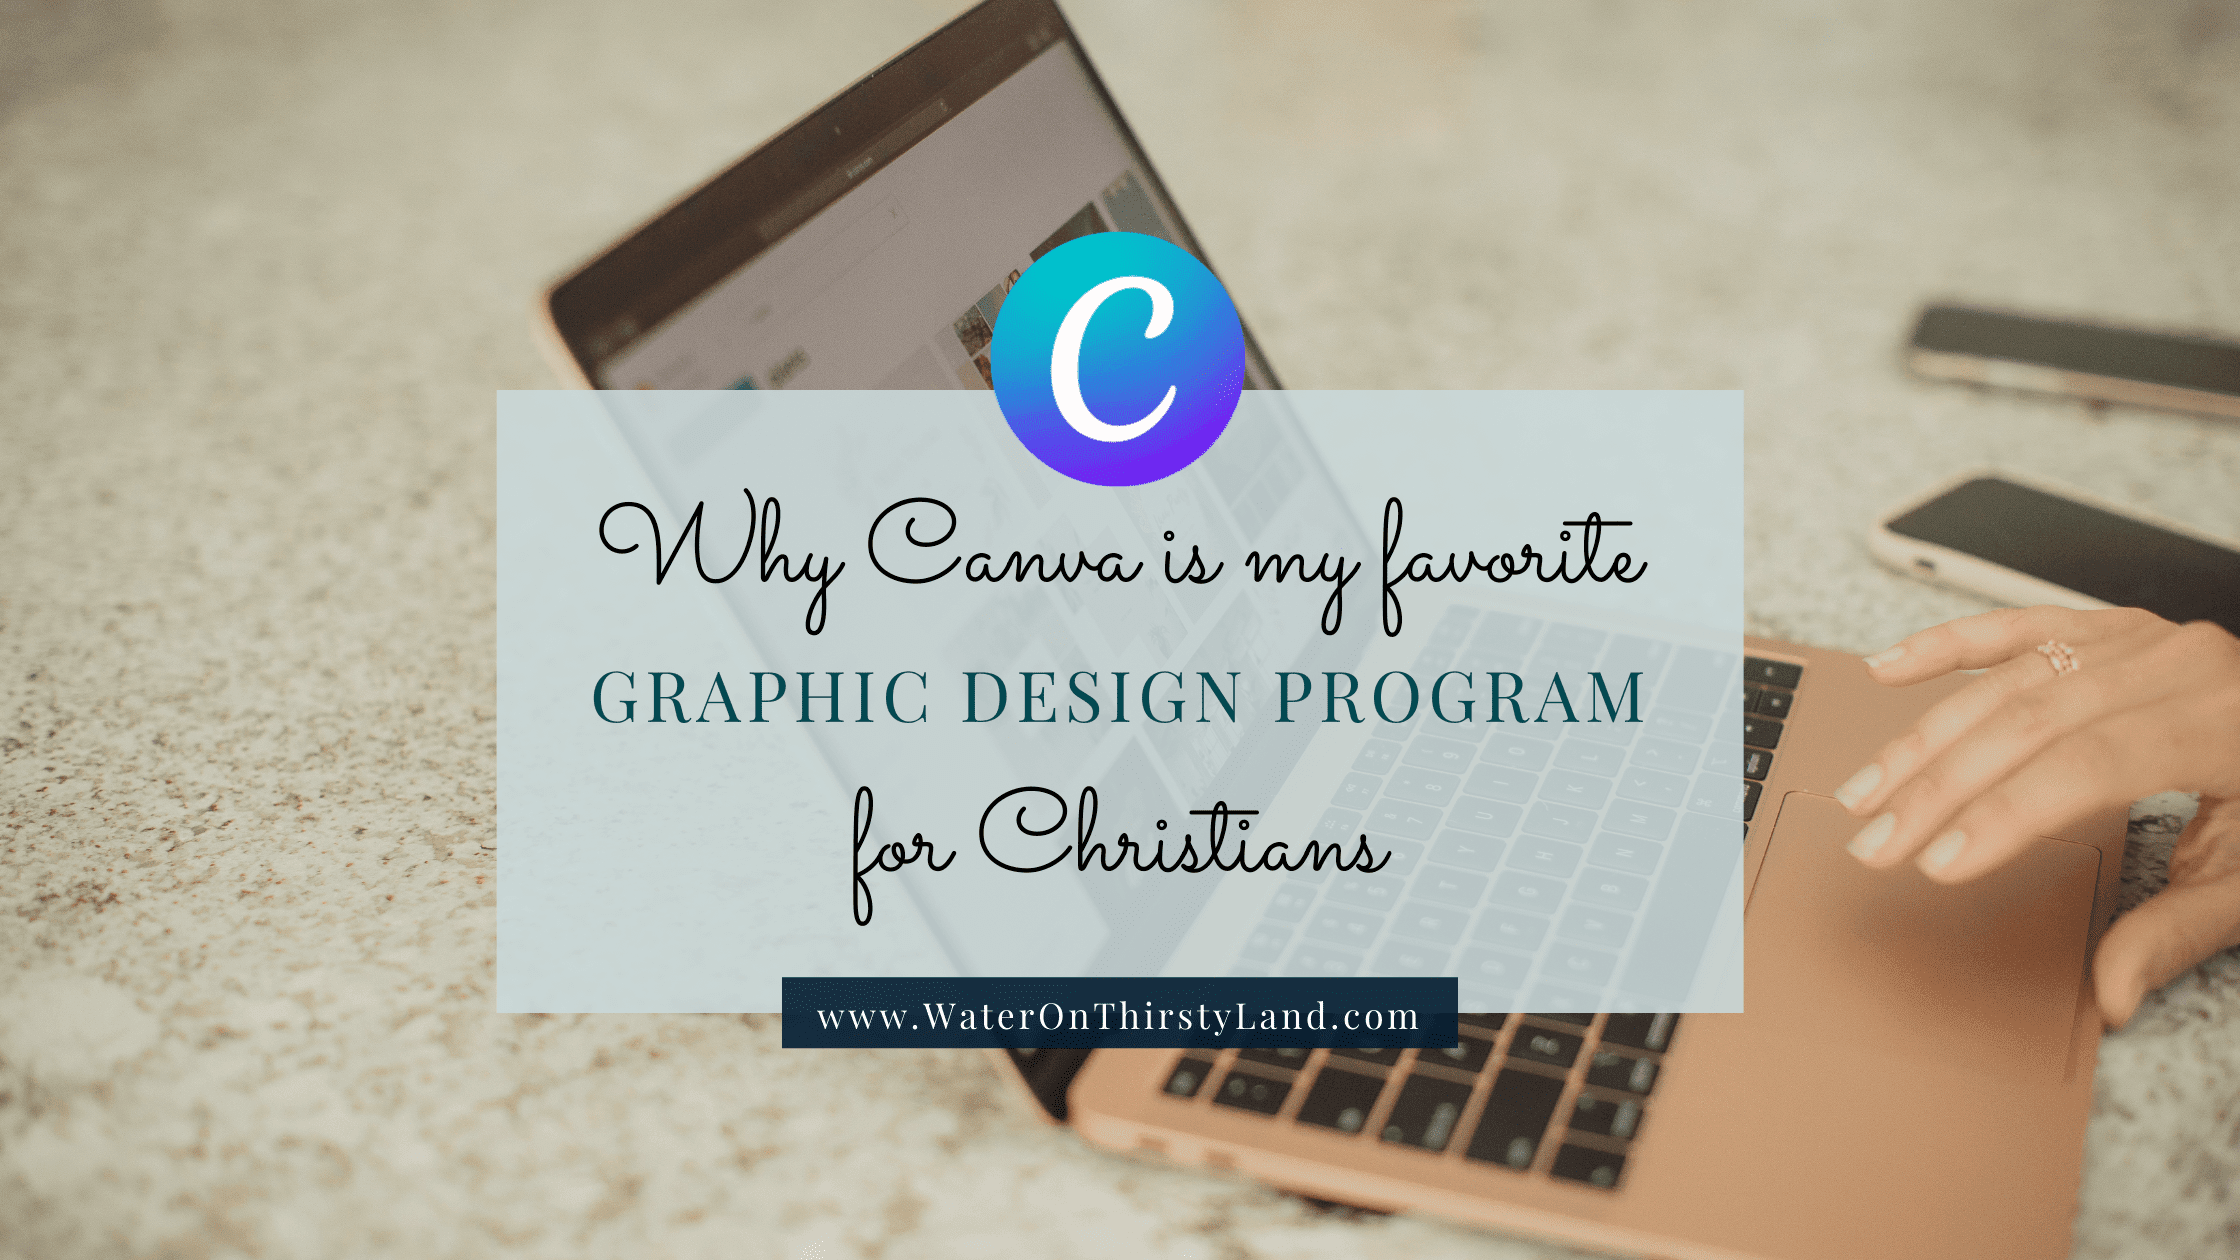 Canva graphic design program